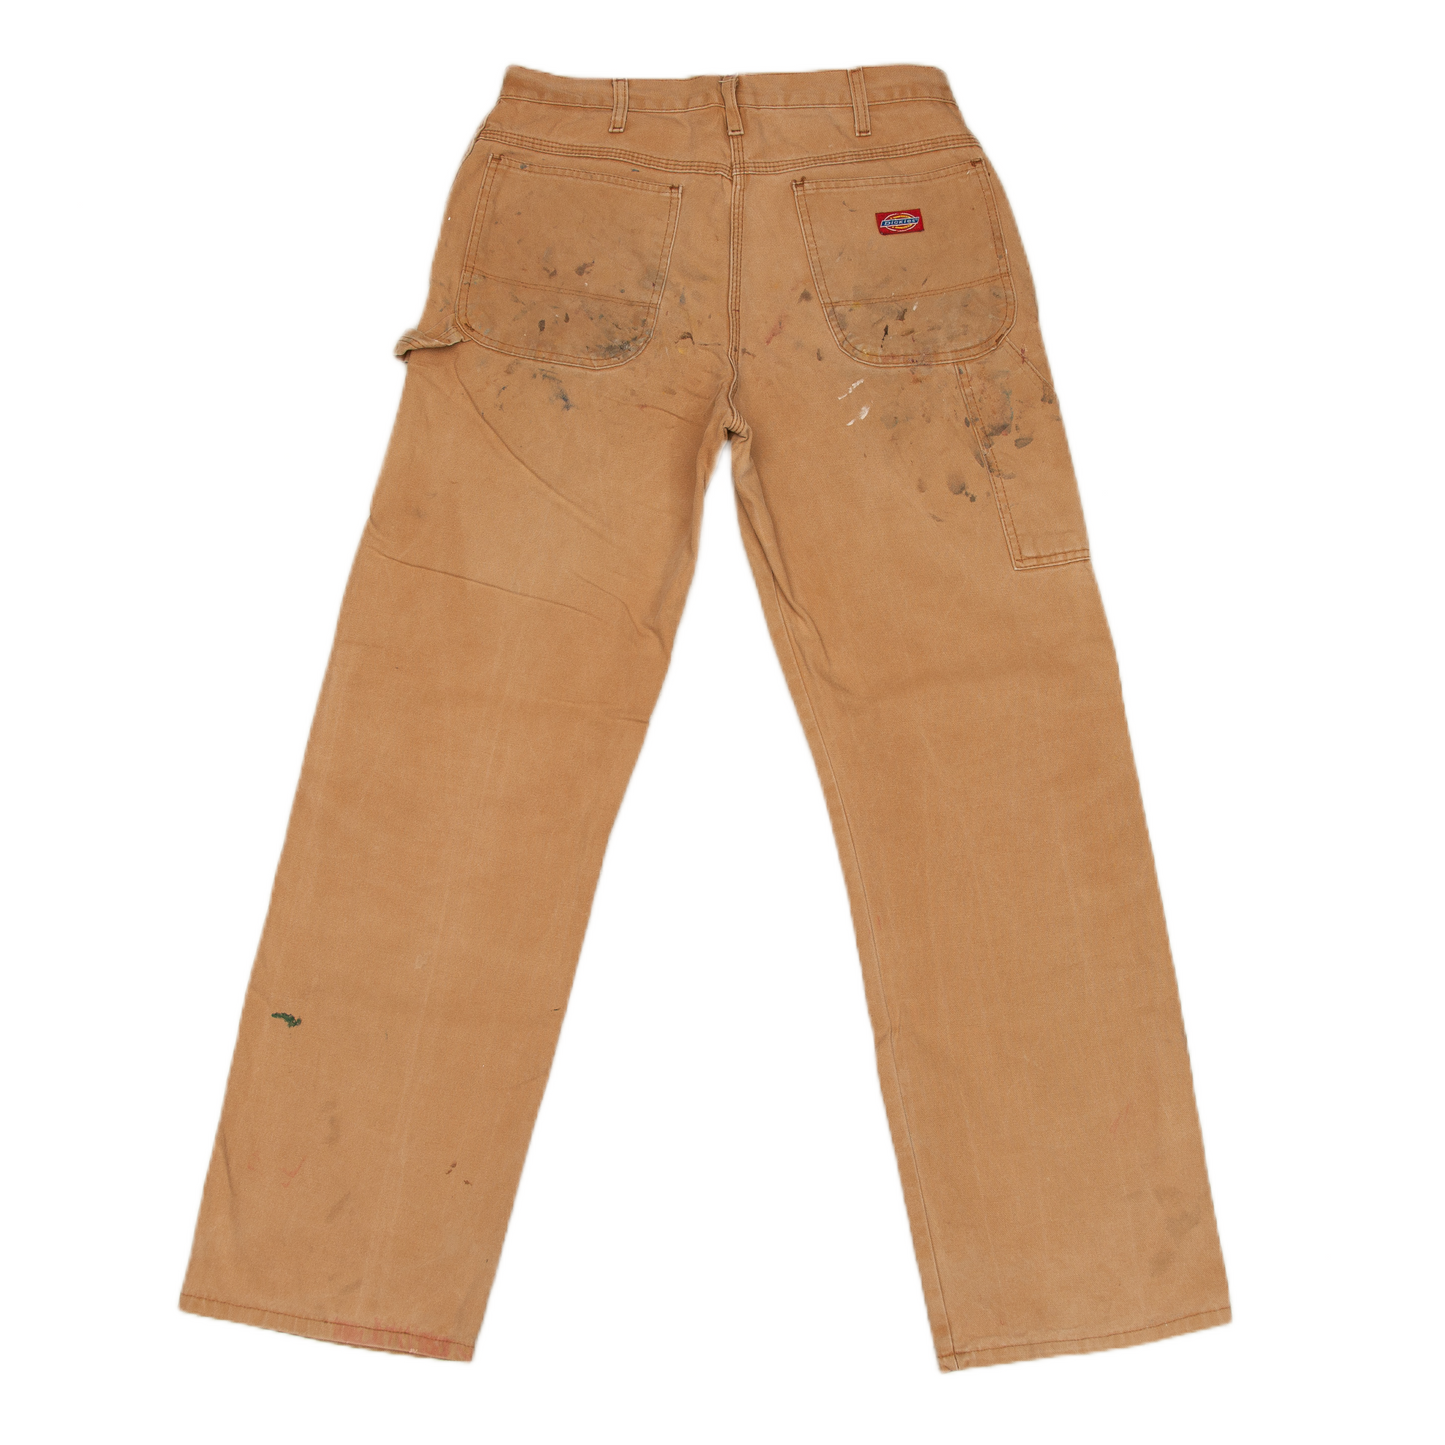 Vintage Dickies Carpenter Pants työhousut 90-luvulta (32x32)